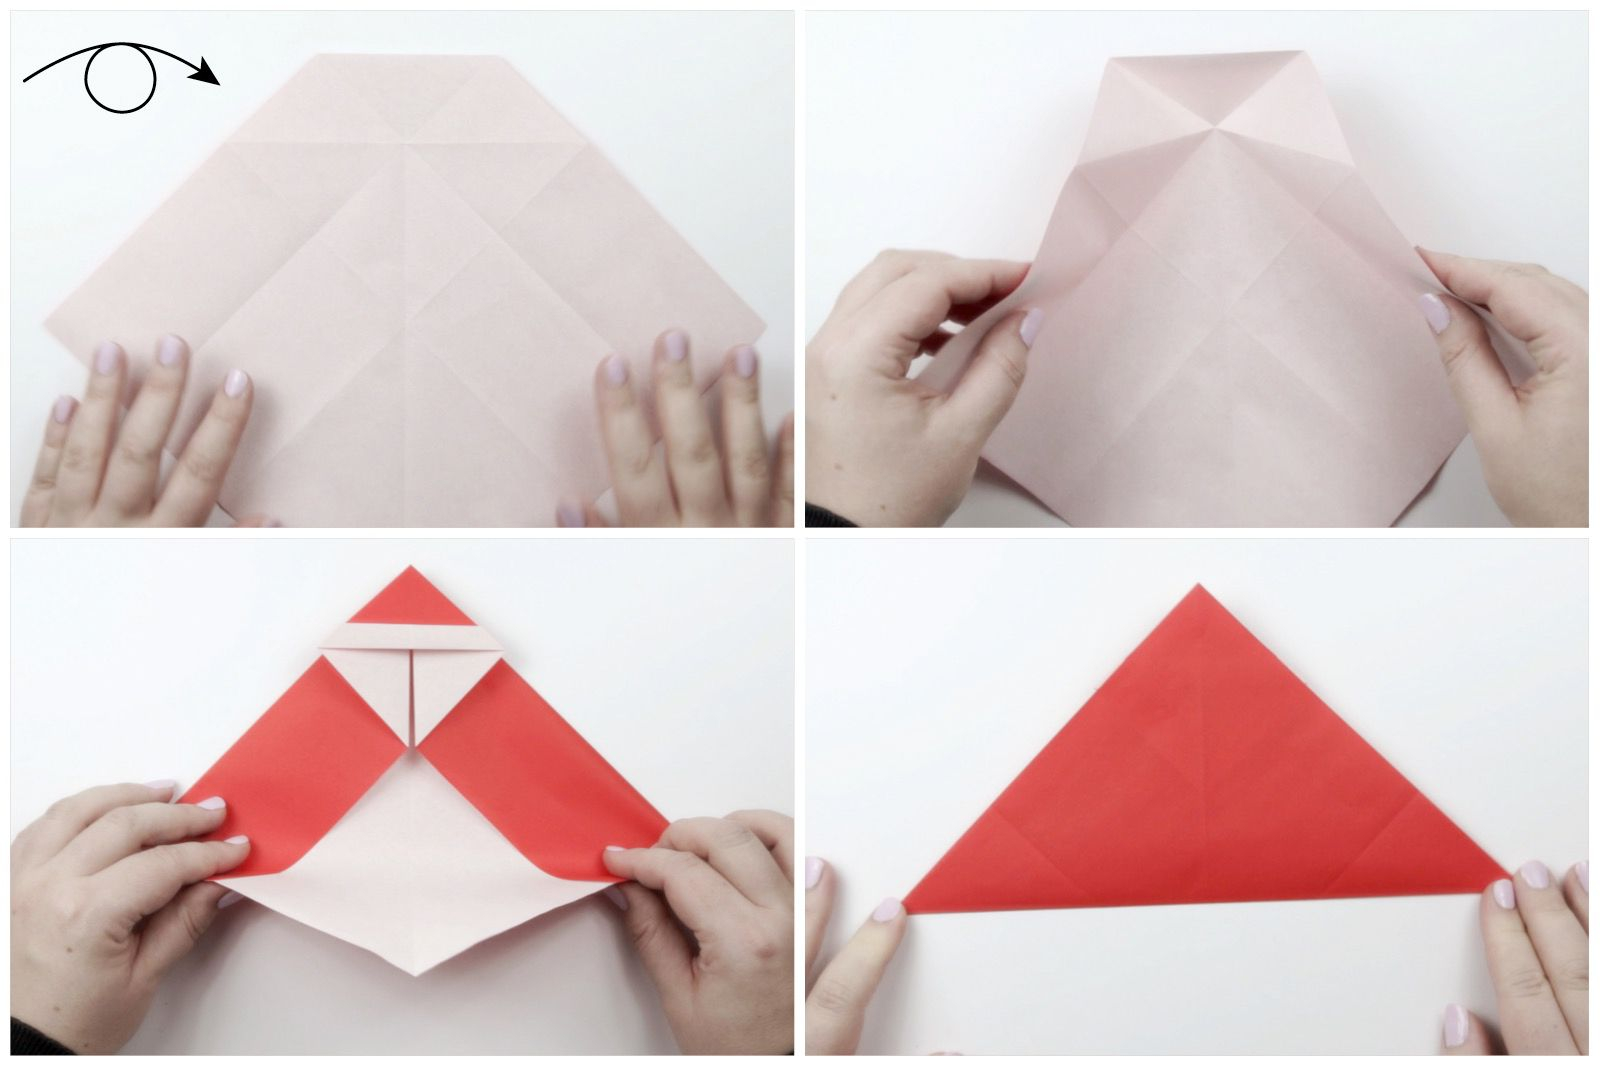 How To Fold Santa Claus Origami How To Make A Cute Origami Santa